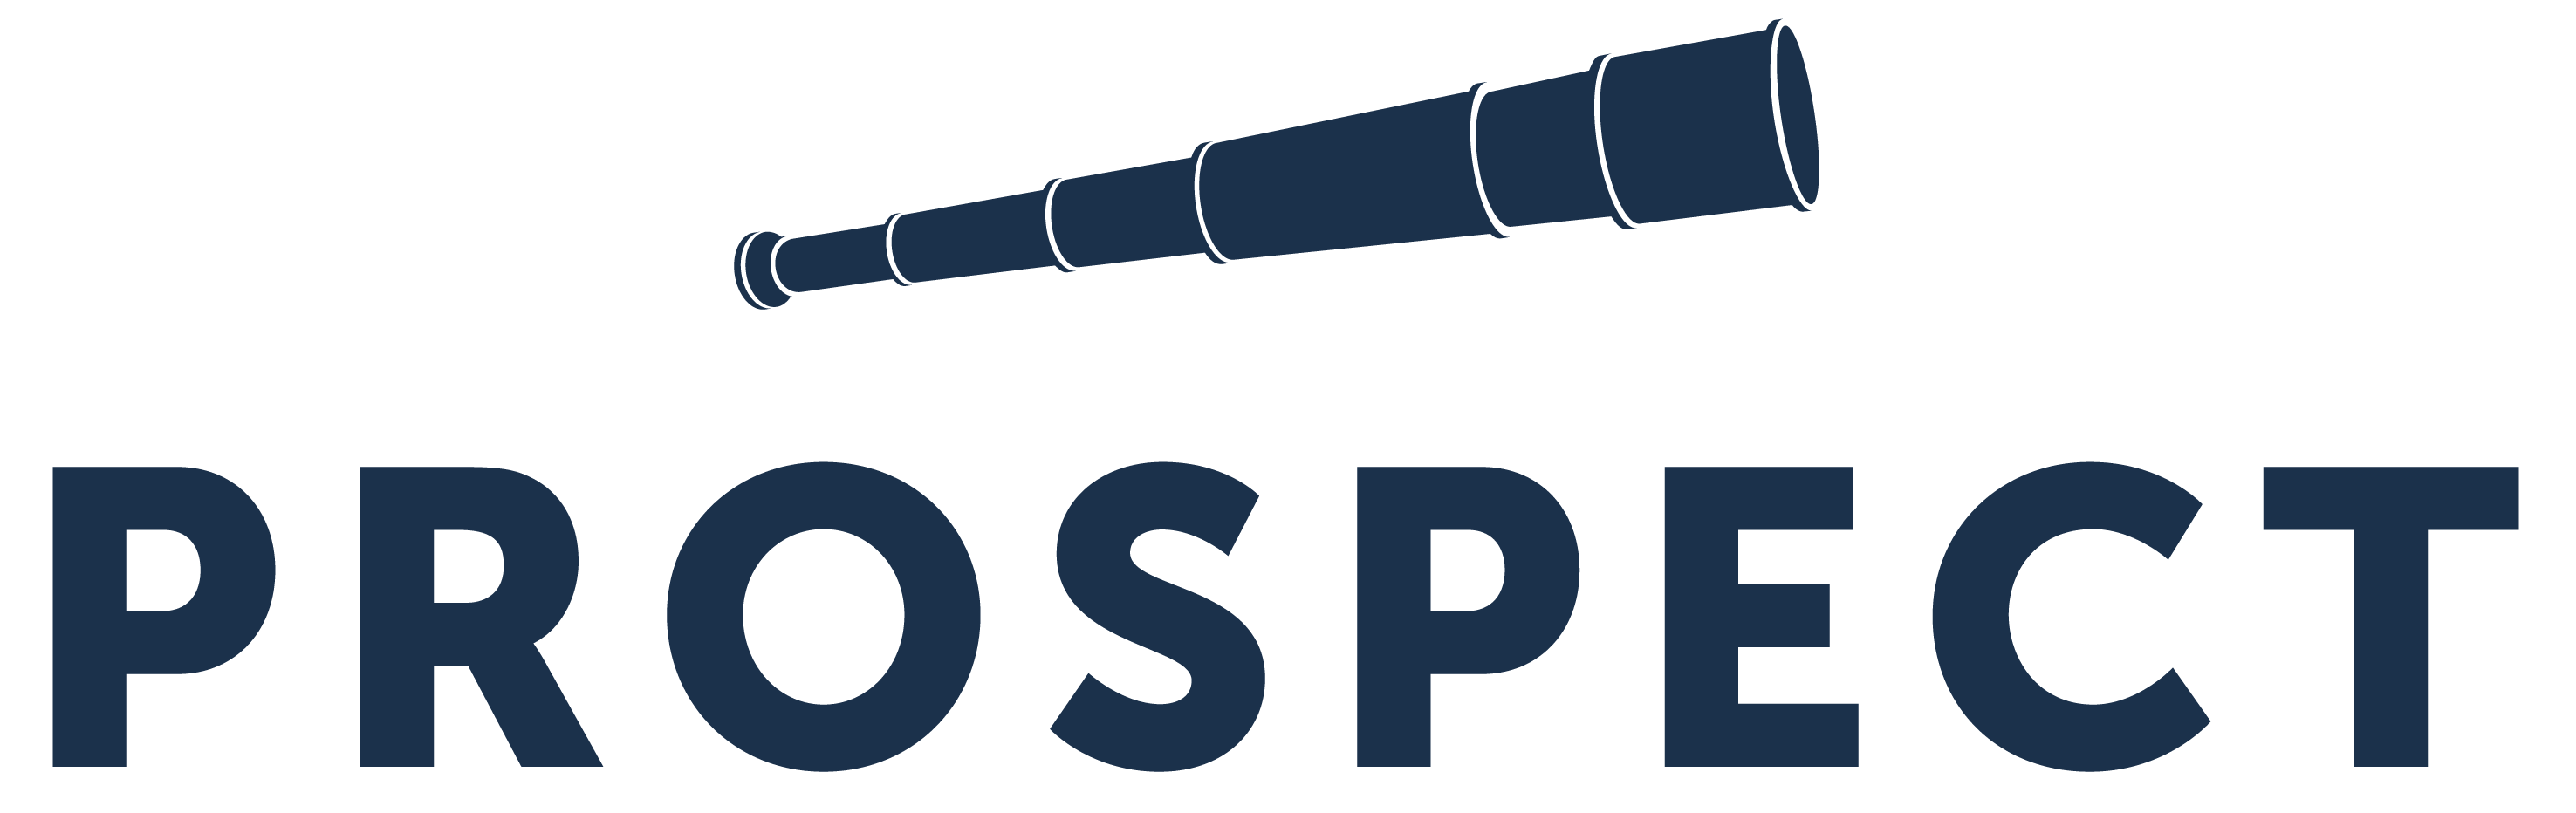 Prospect Logo - Prospect Logos